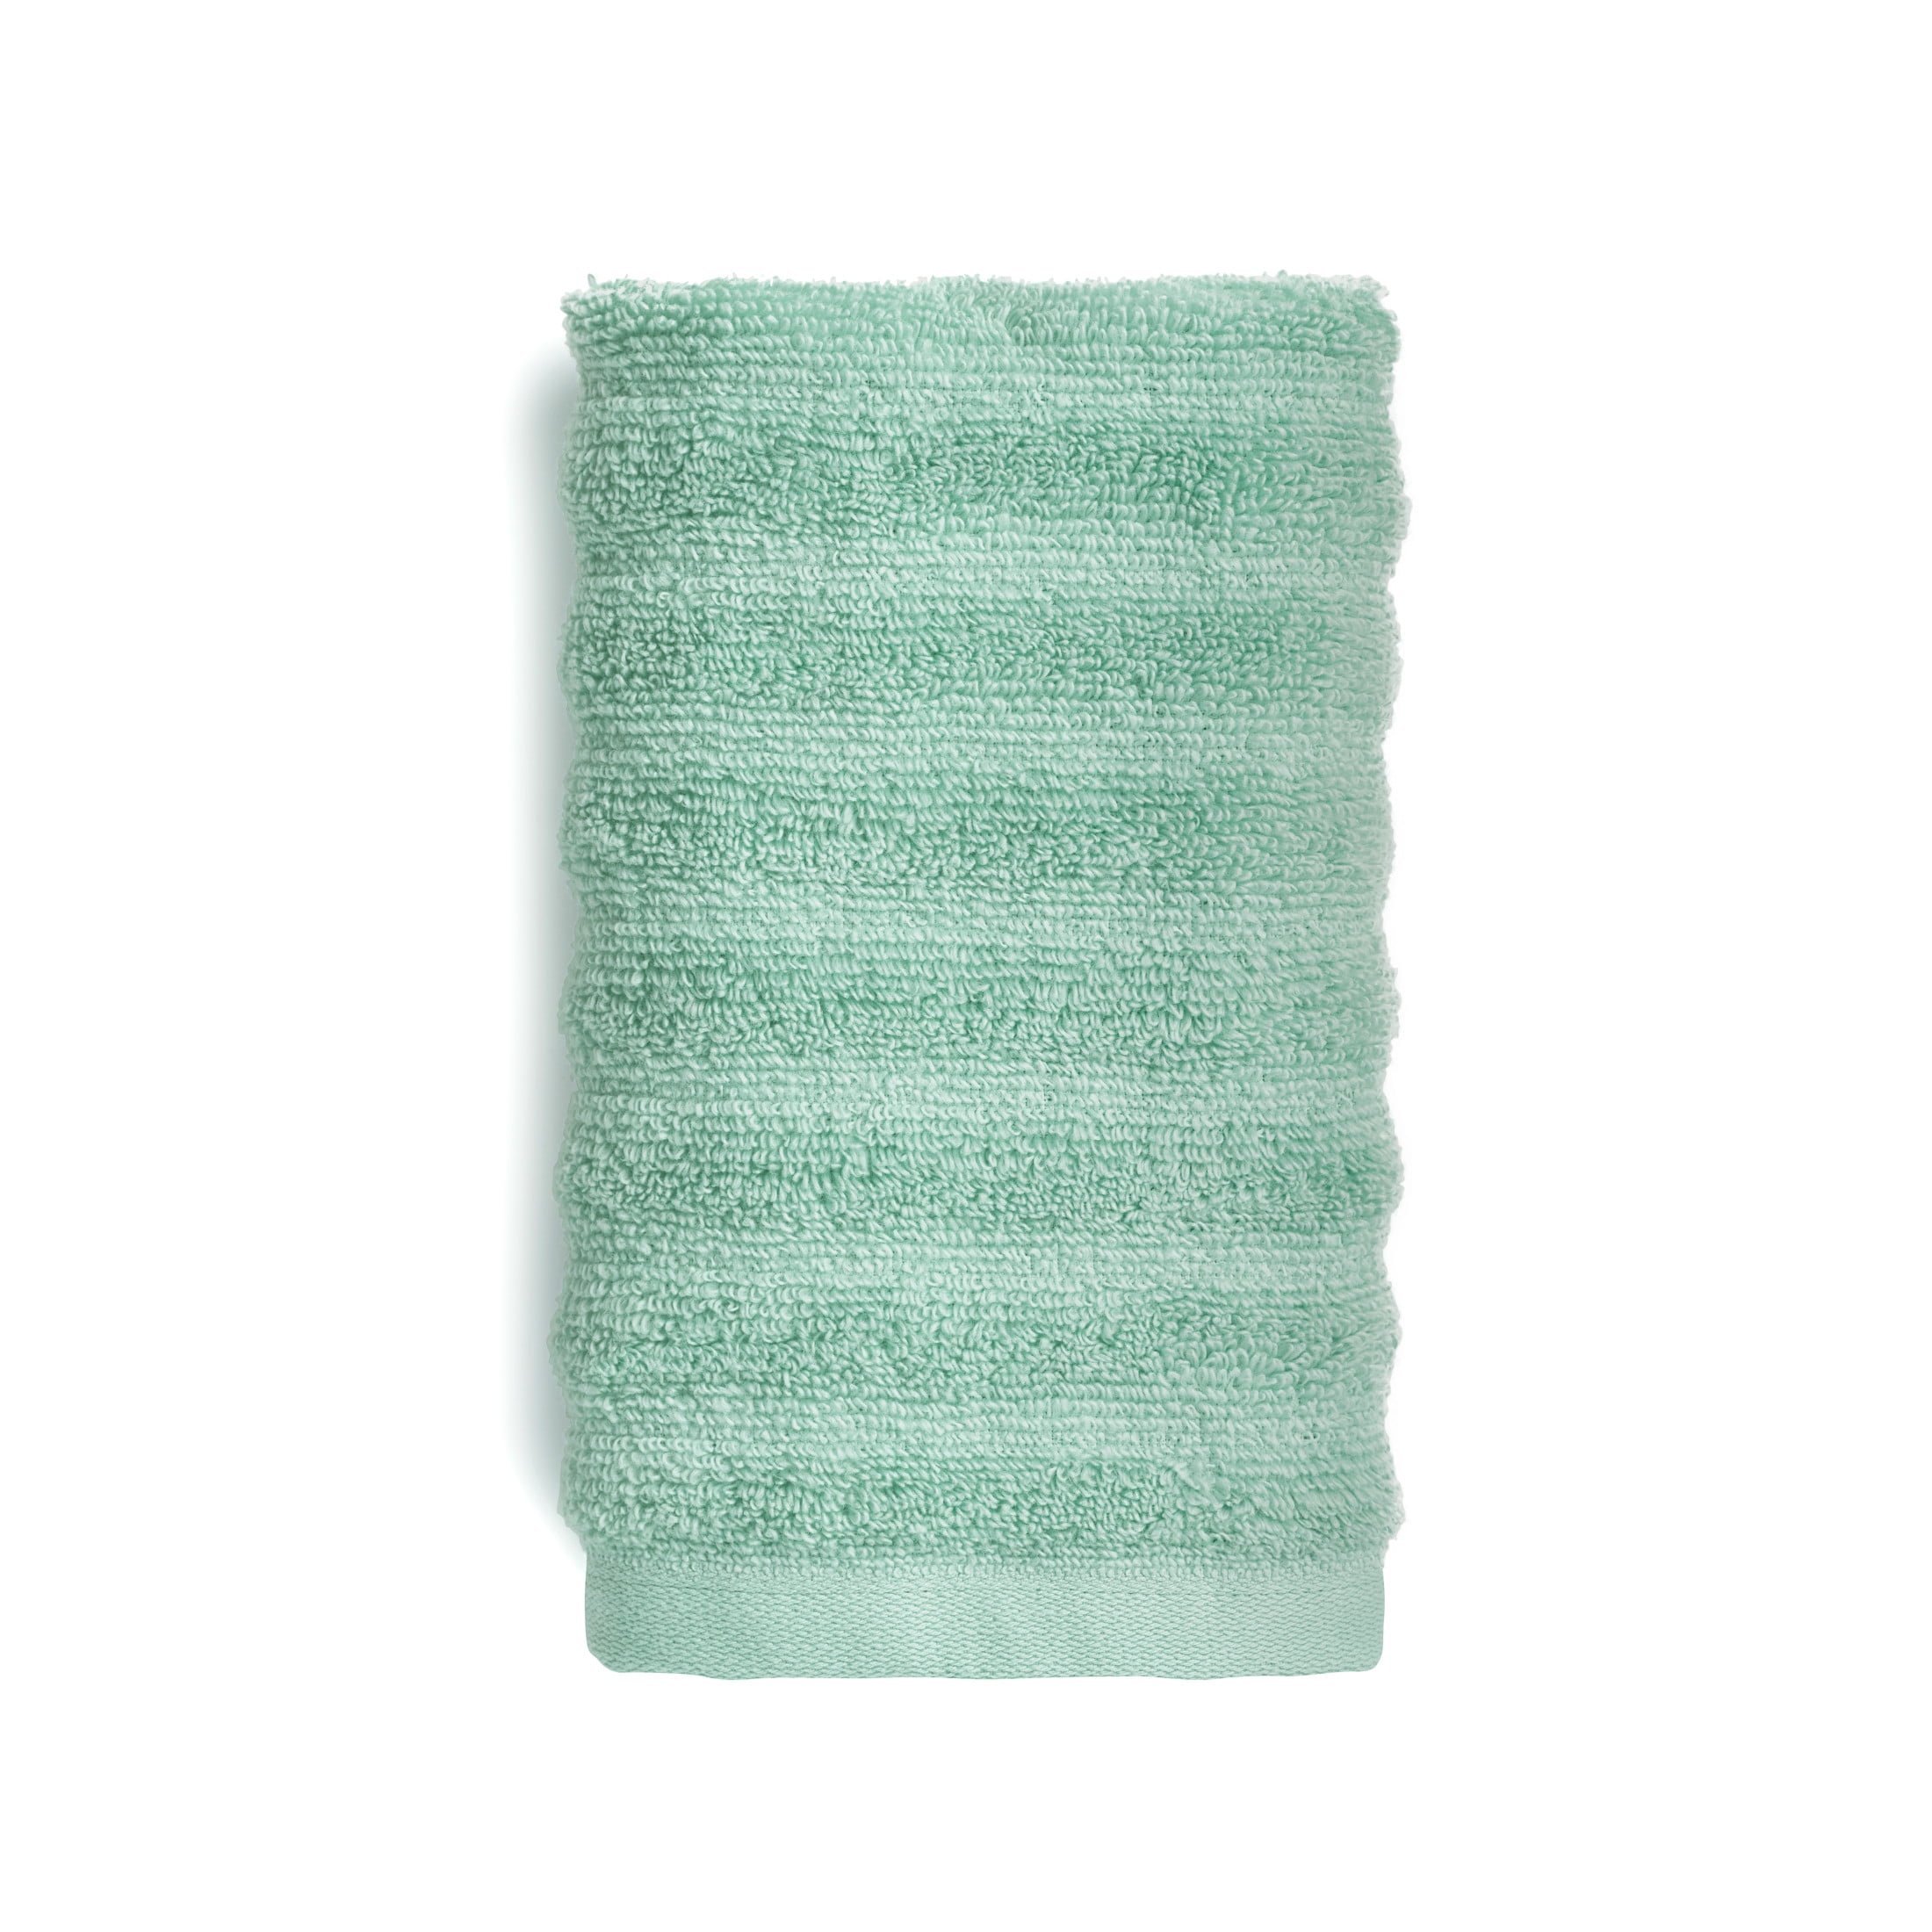 Textured 2 2 Set 2 Iris Towel Collection, Performance Whisper 6-Piece Mainstays Bath, Wash Hand,